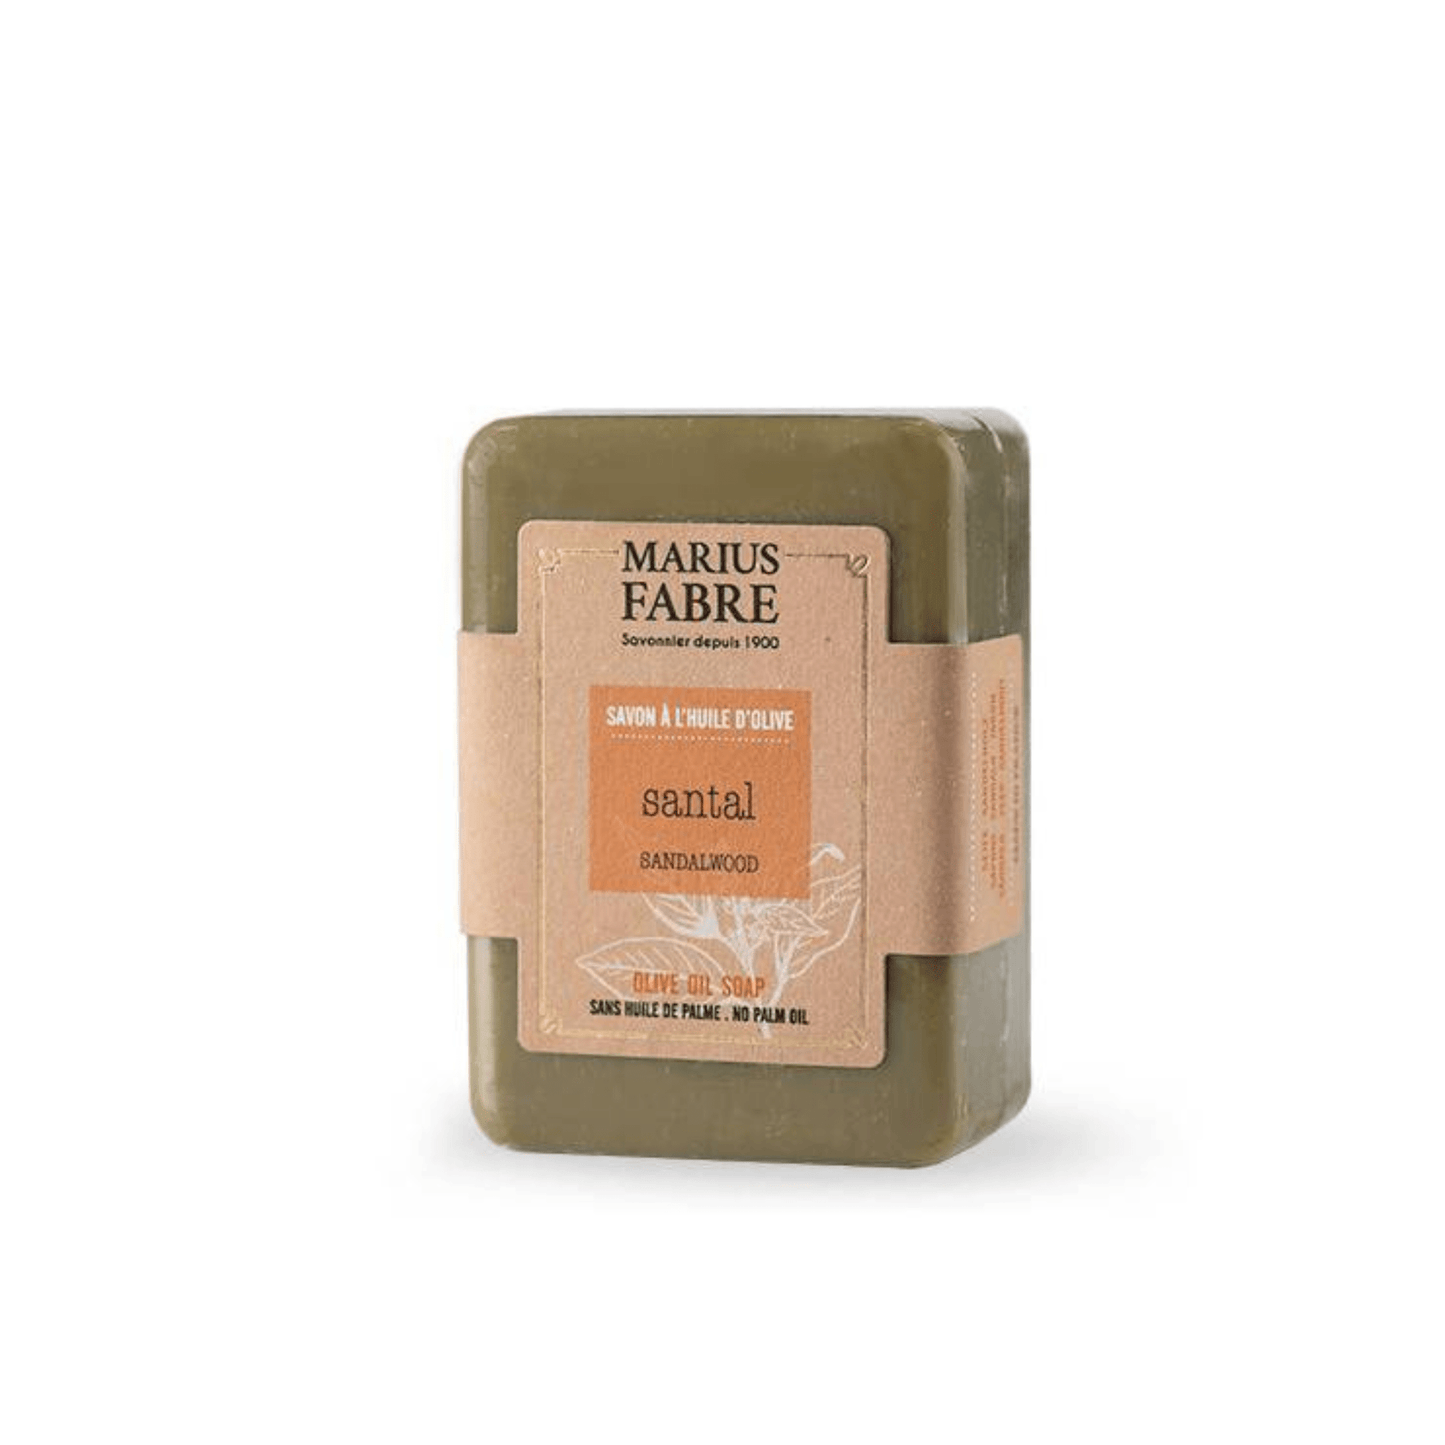 Primary Image of Olive Oil Bar Soap - Sandalwood